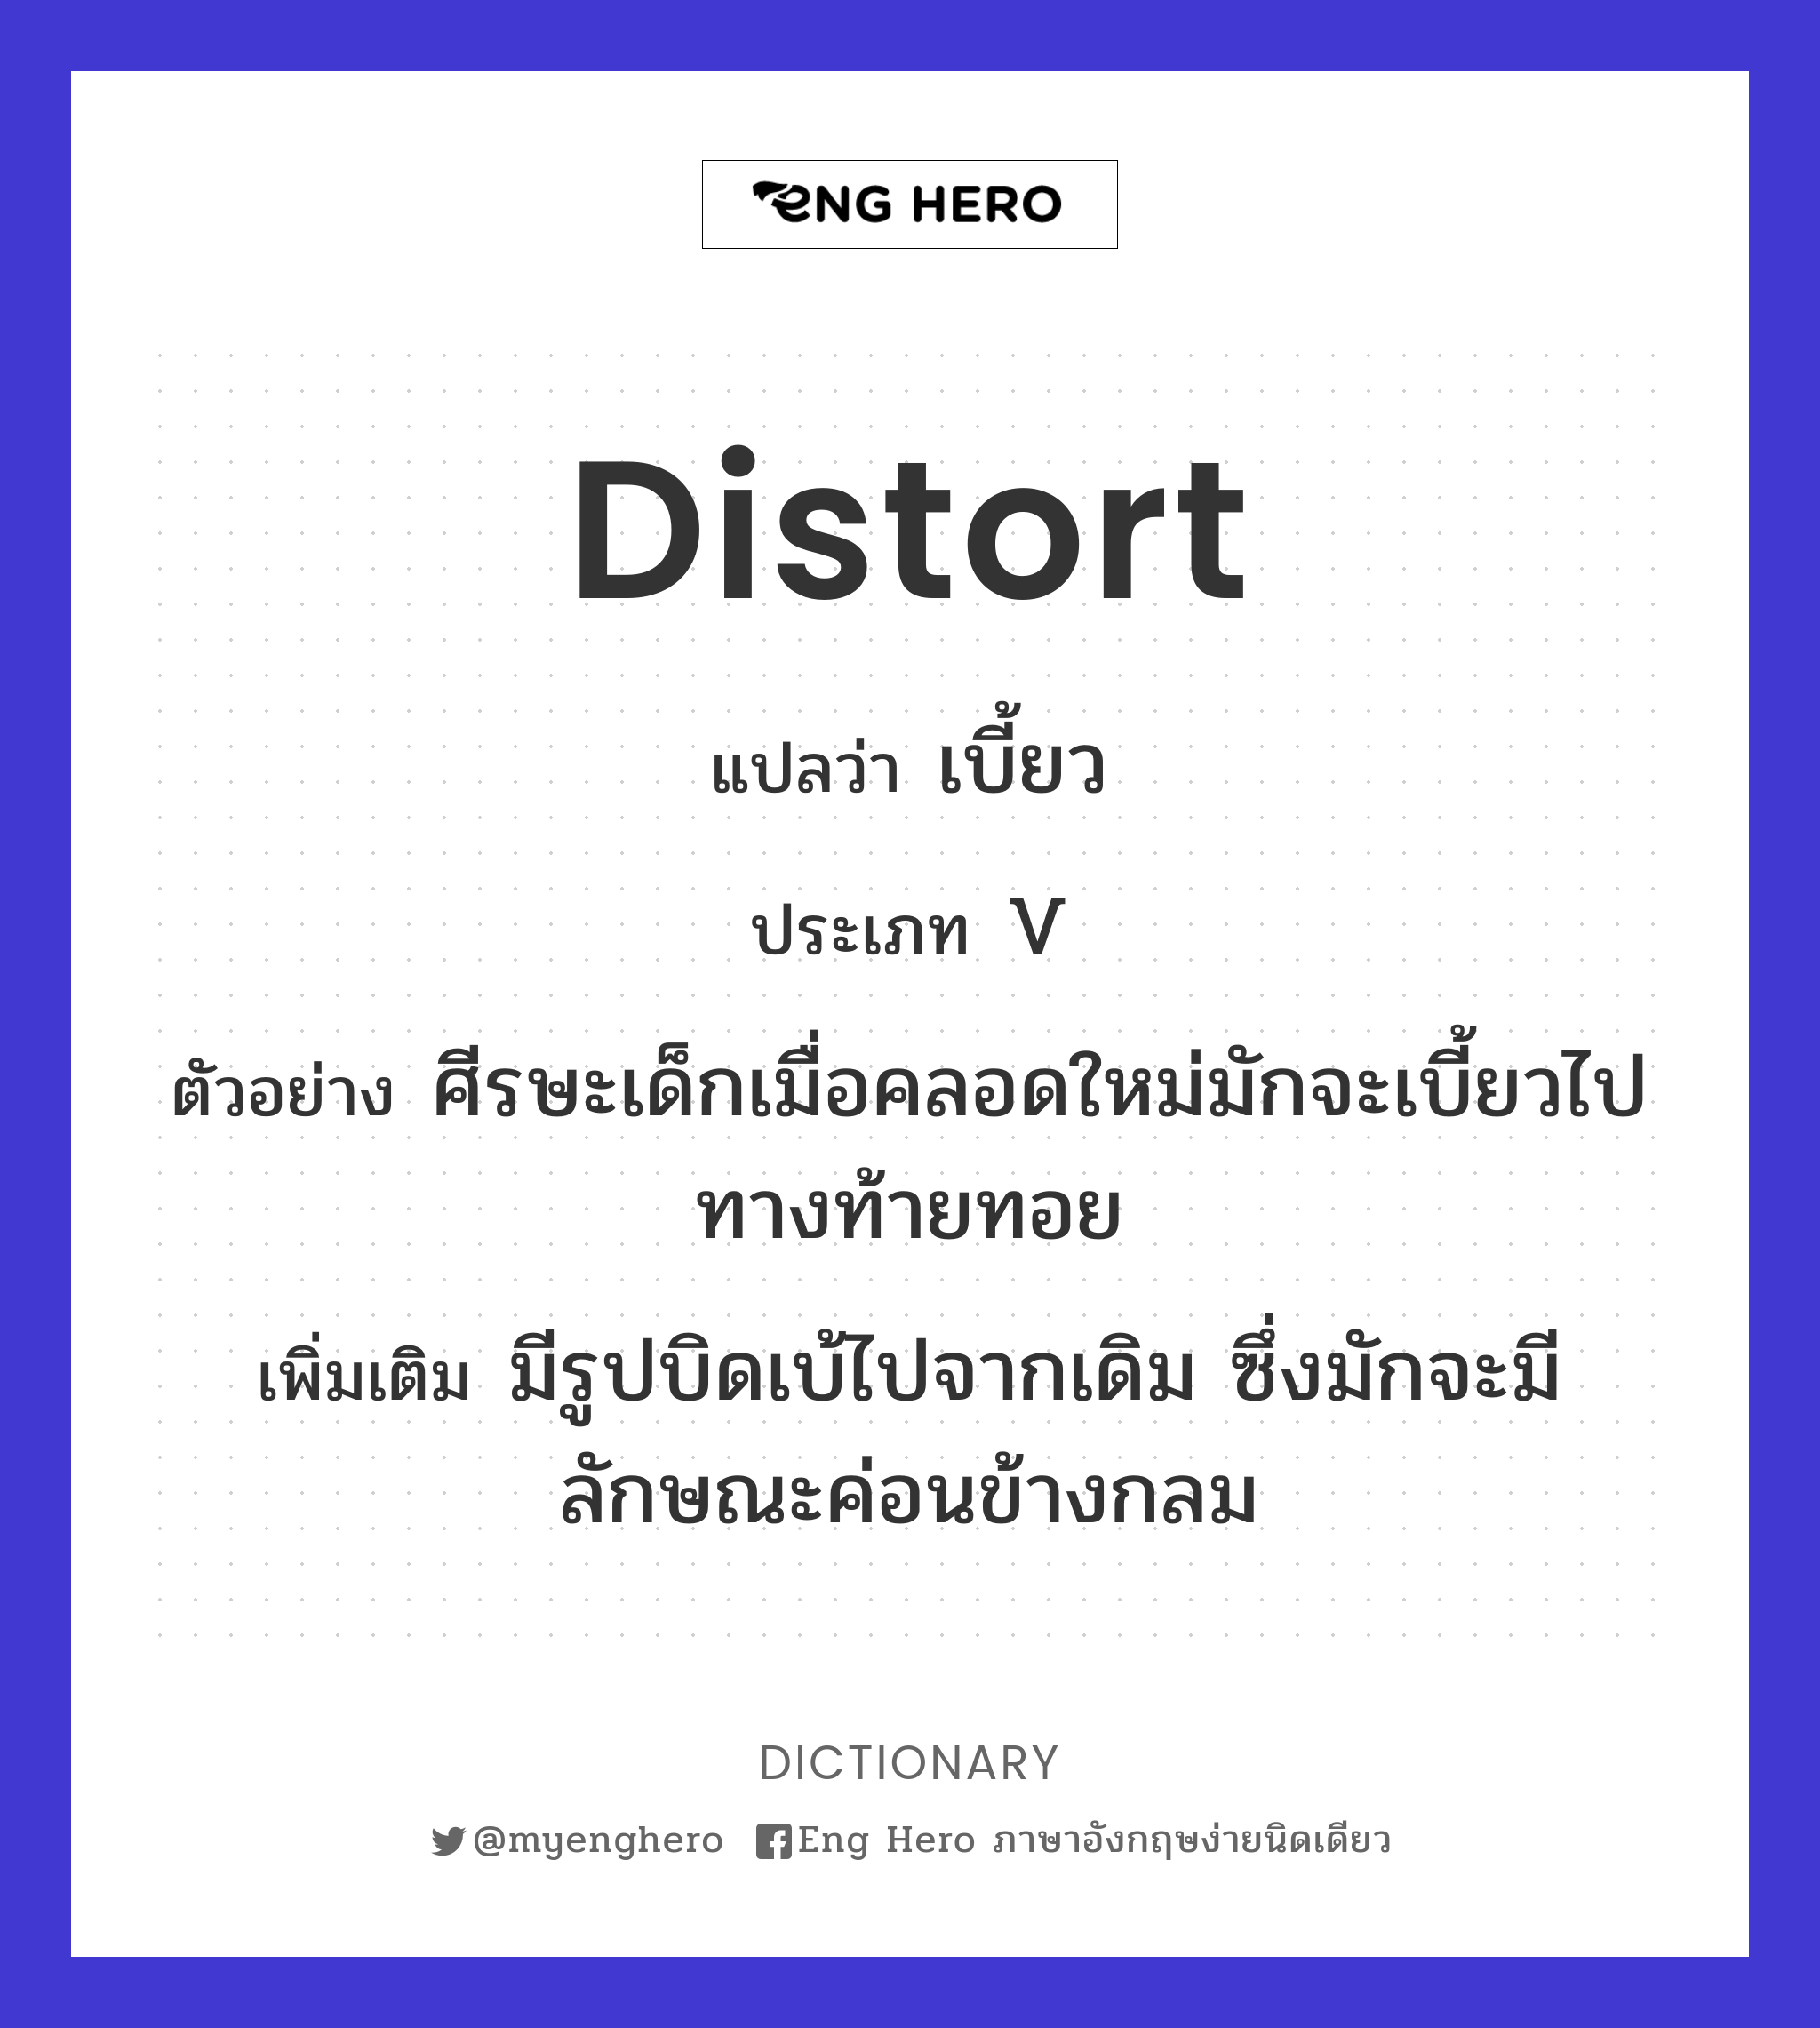 distort